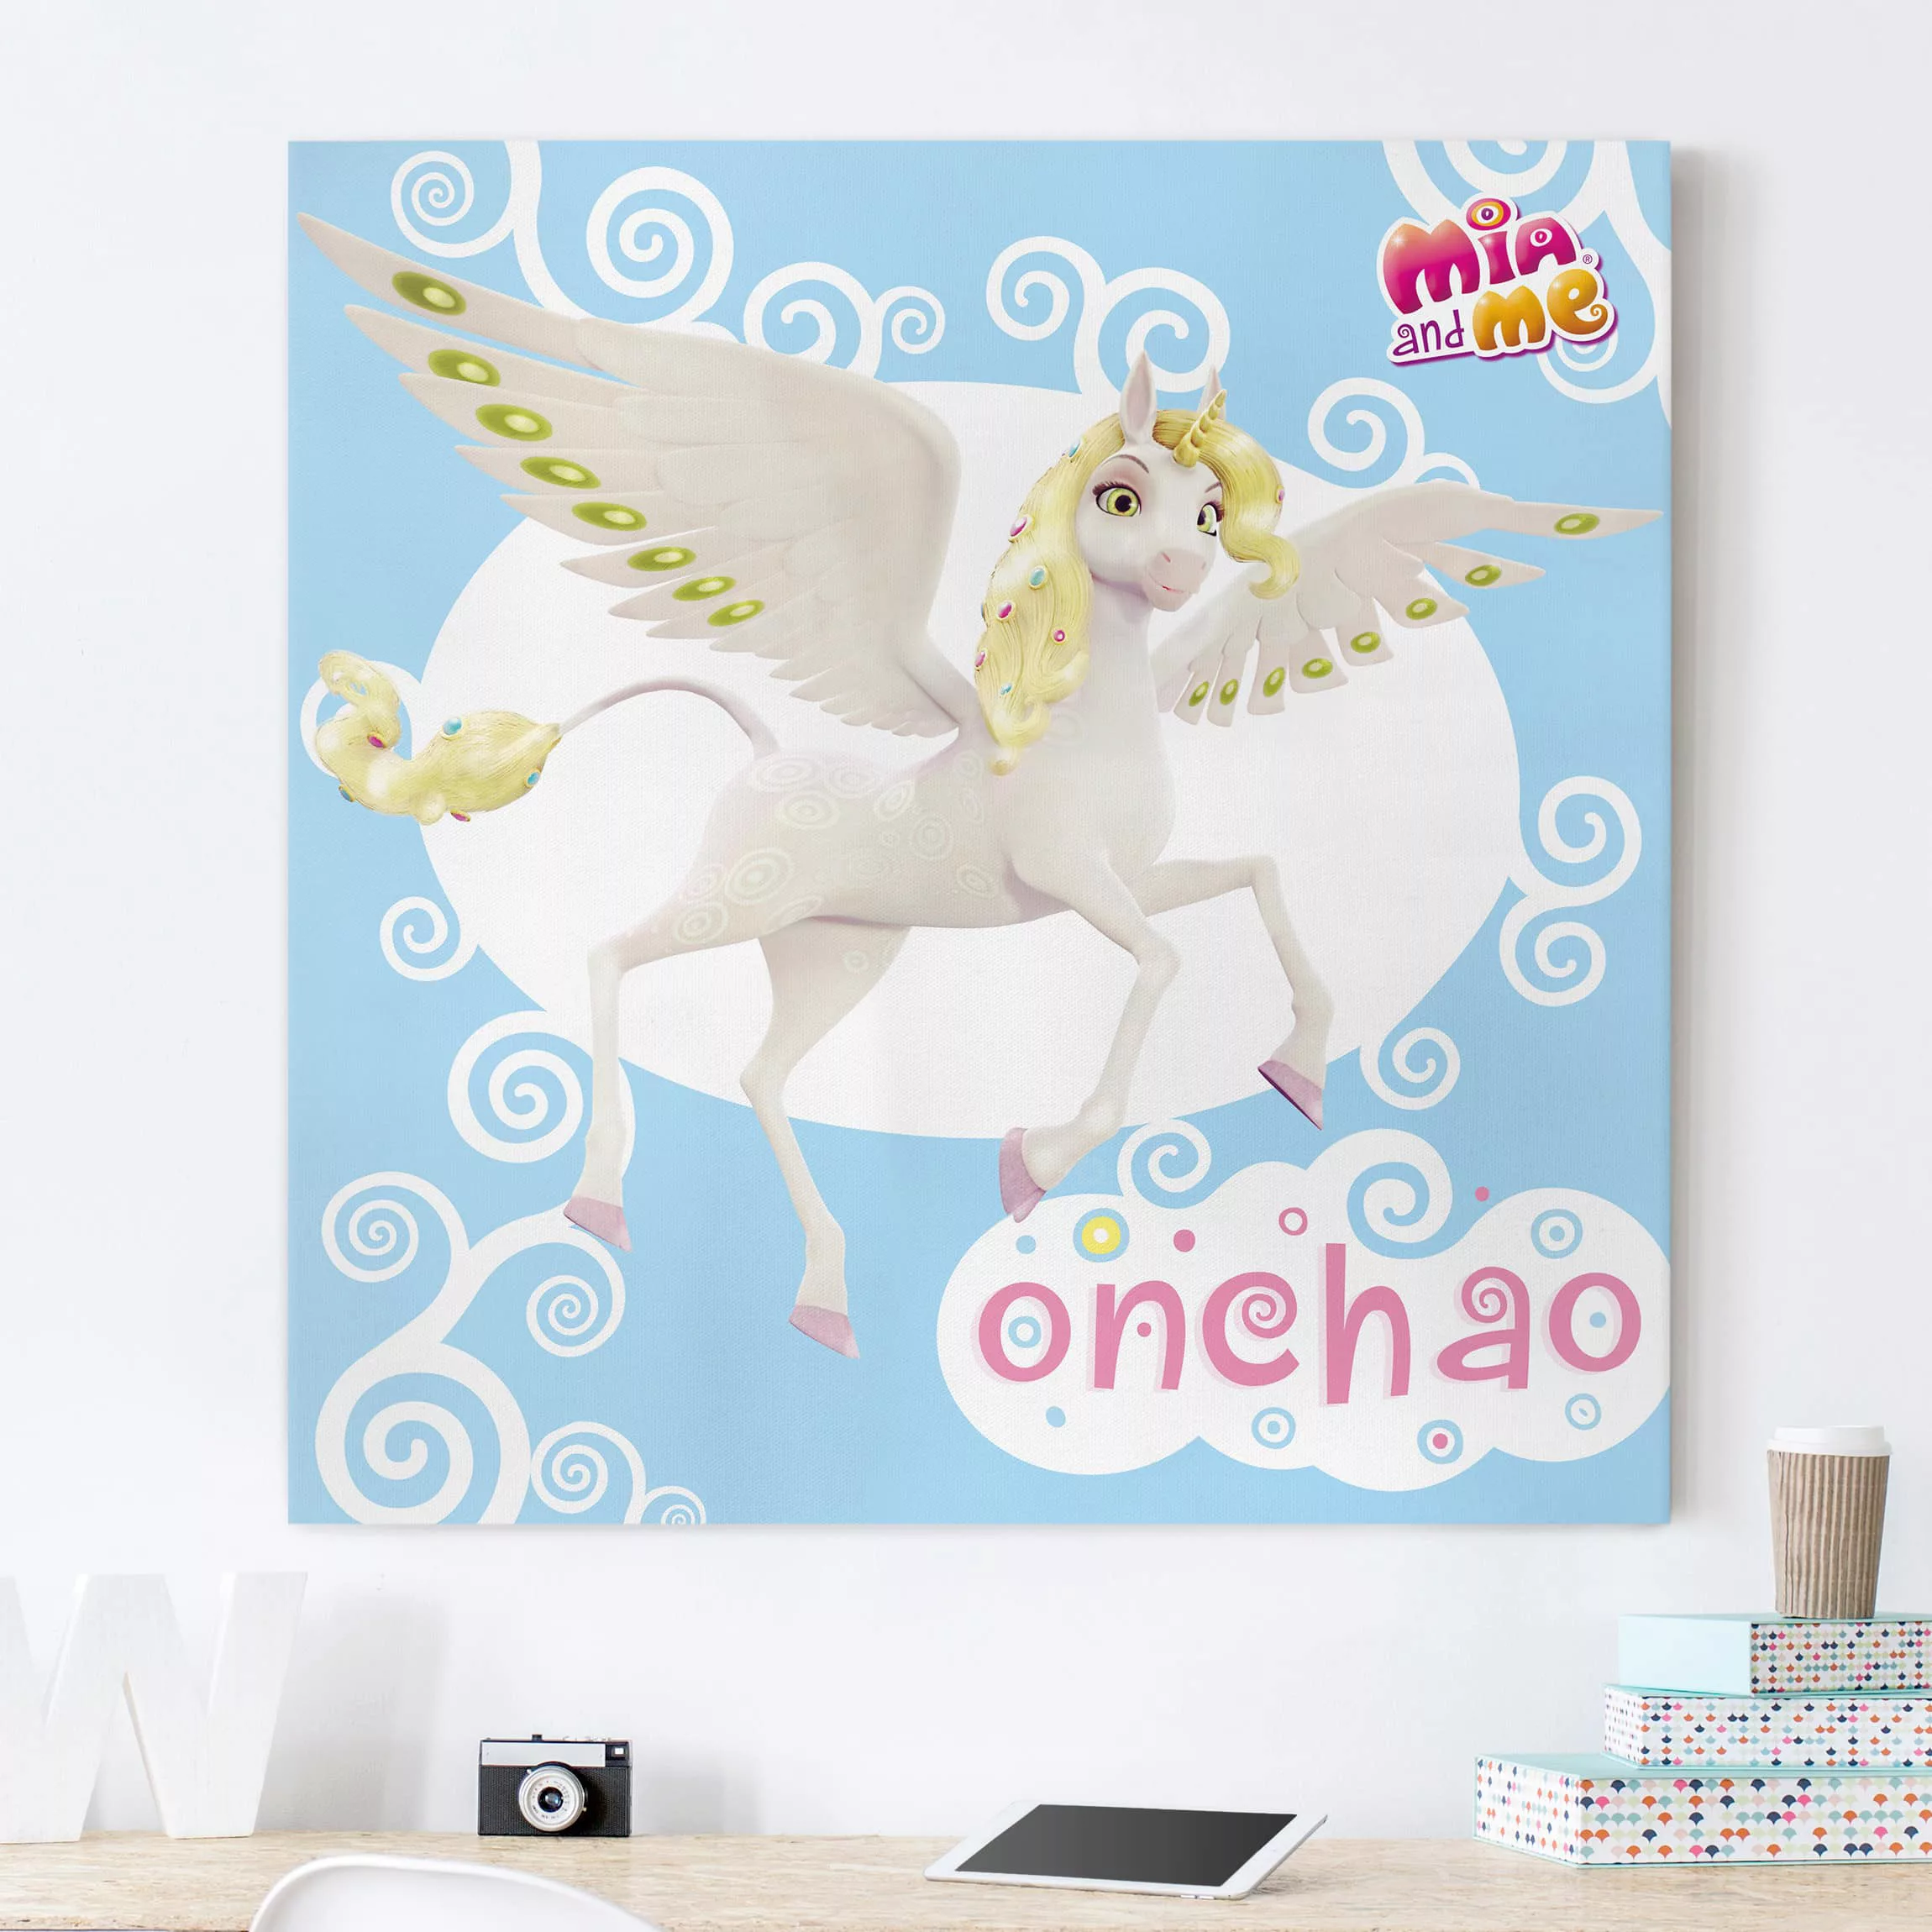 Leinwandbild Kinderzimmer - Quadrat Mia and me - Einhorn Onchao günstig online kaufen